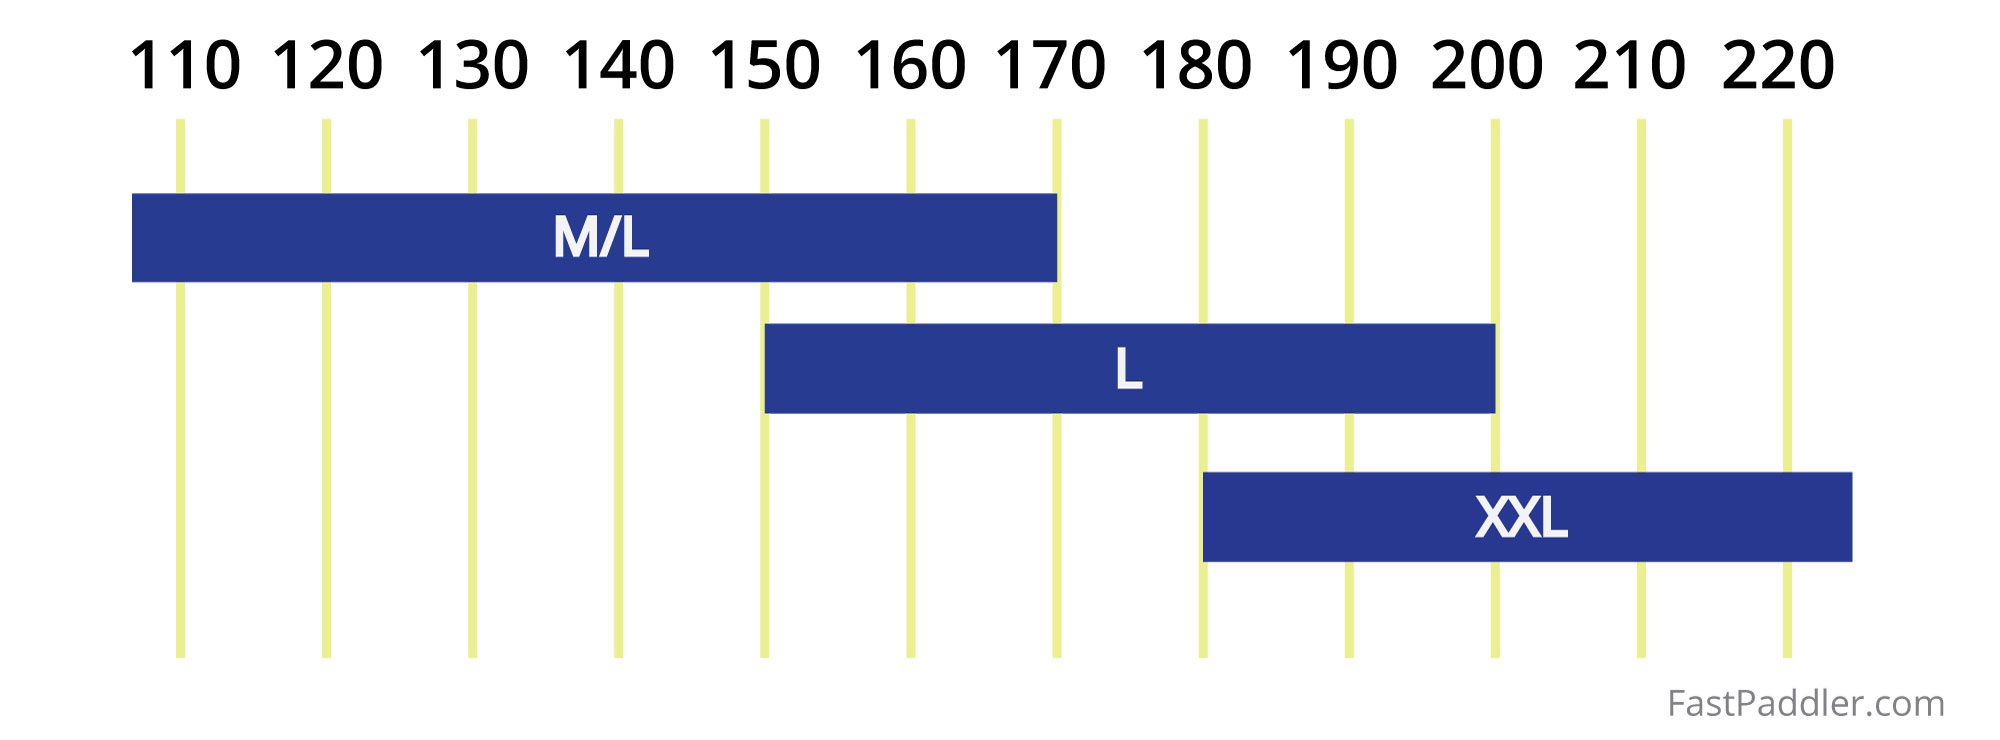 Nelo surfski size chart, ML, L, XXL